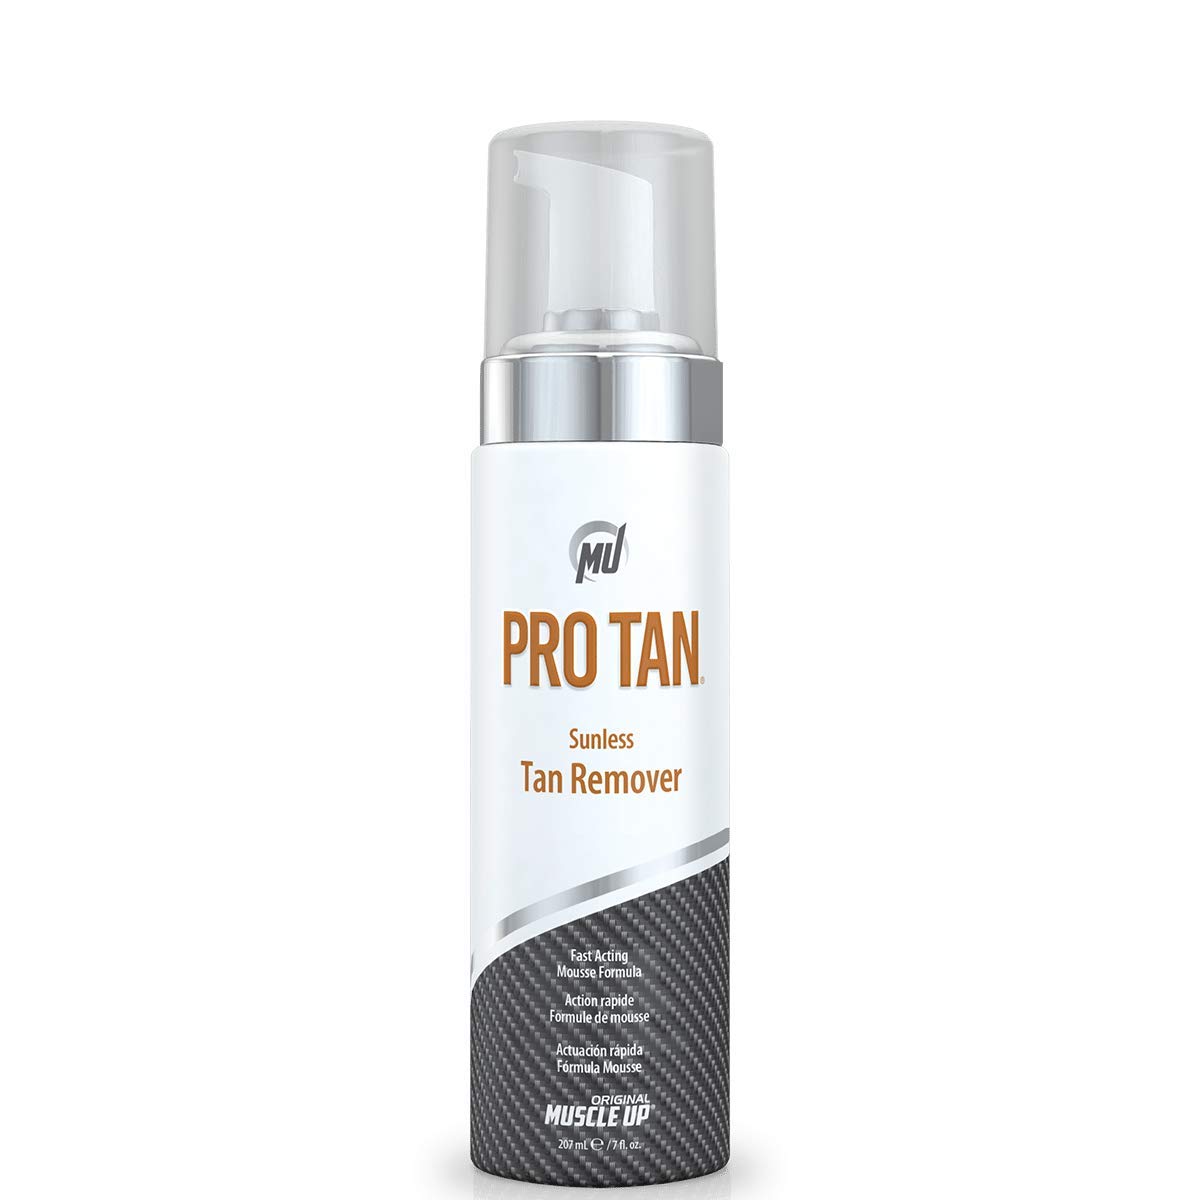 Pro Tan, Sunless Tan Remover